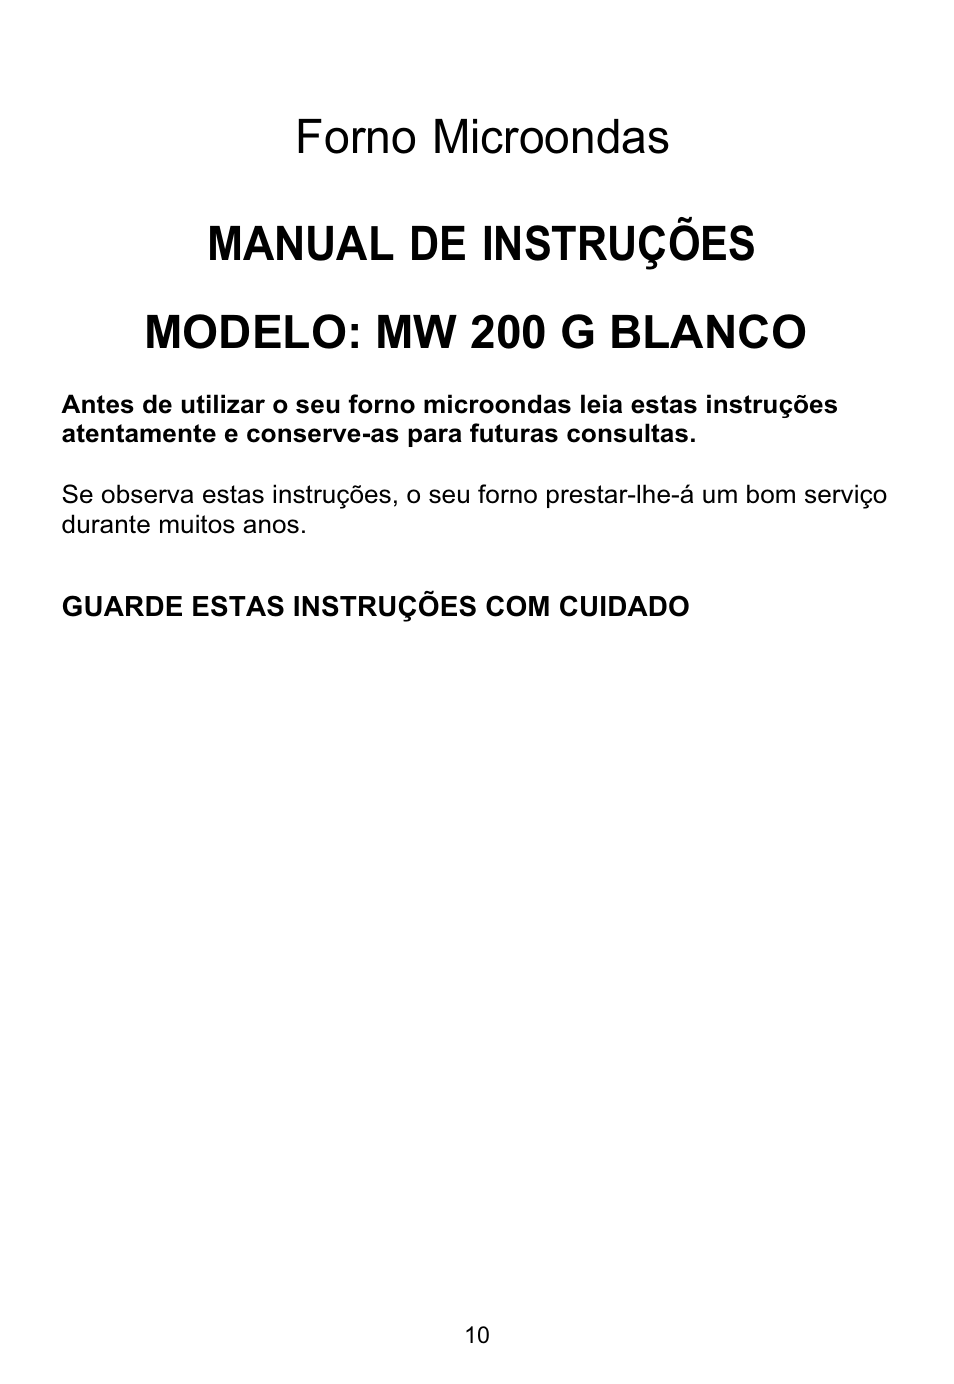 Forno microondas manual de instruções, Modelo: mw 200 g blanco | Teka MW  200 G User Manual | Page 11 / 29